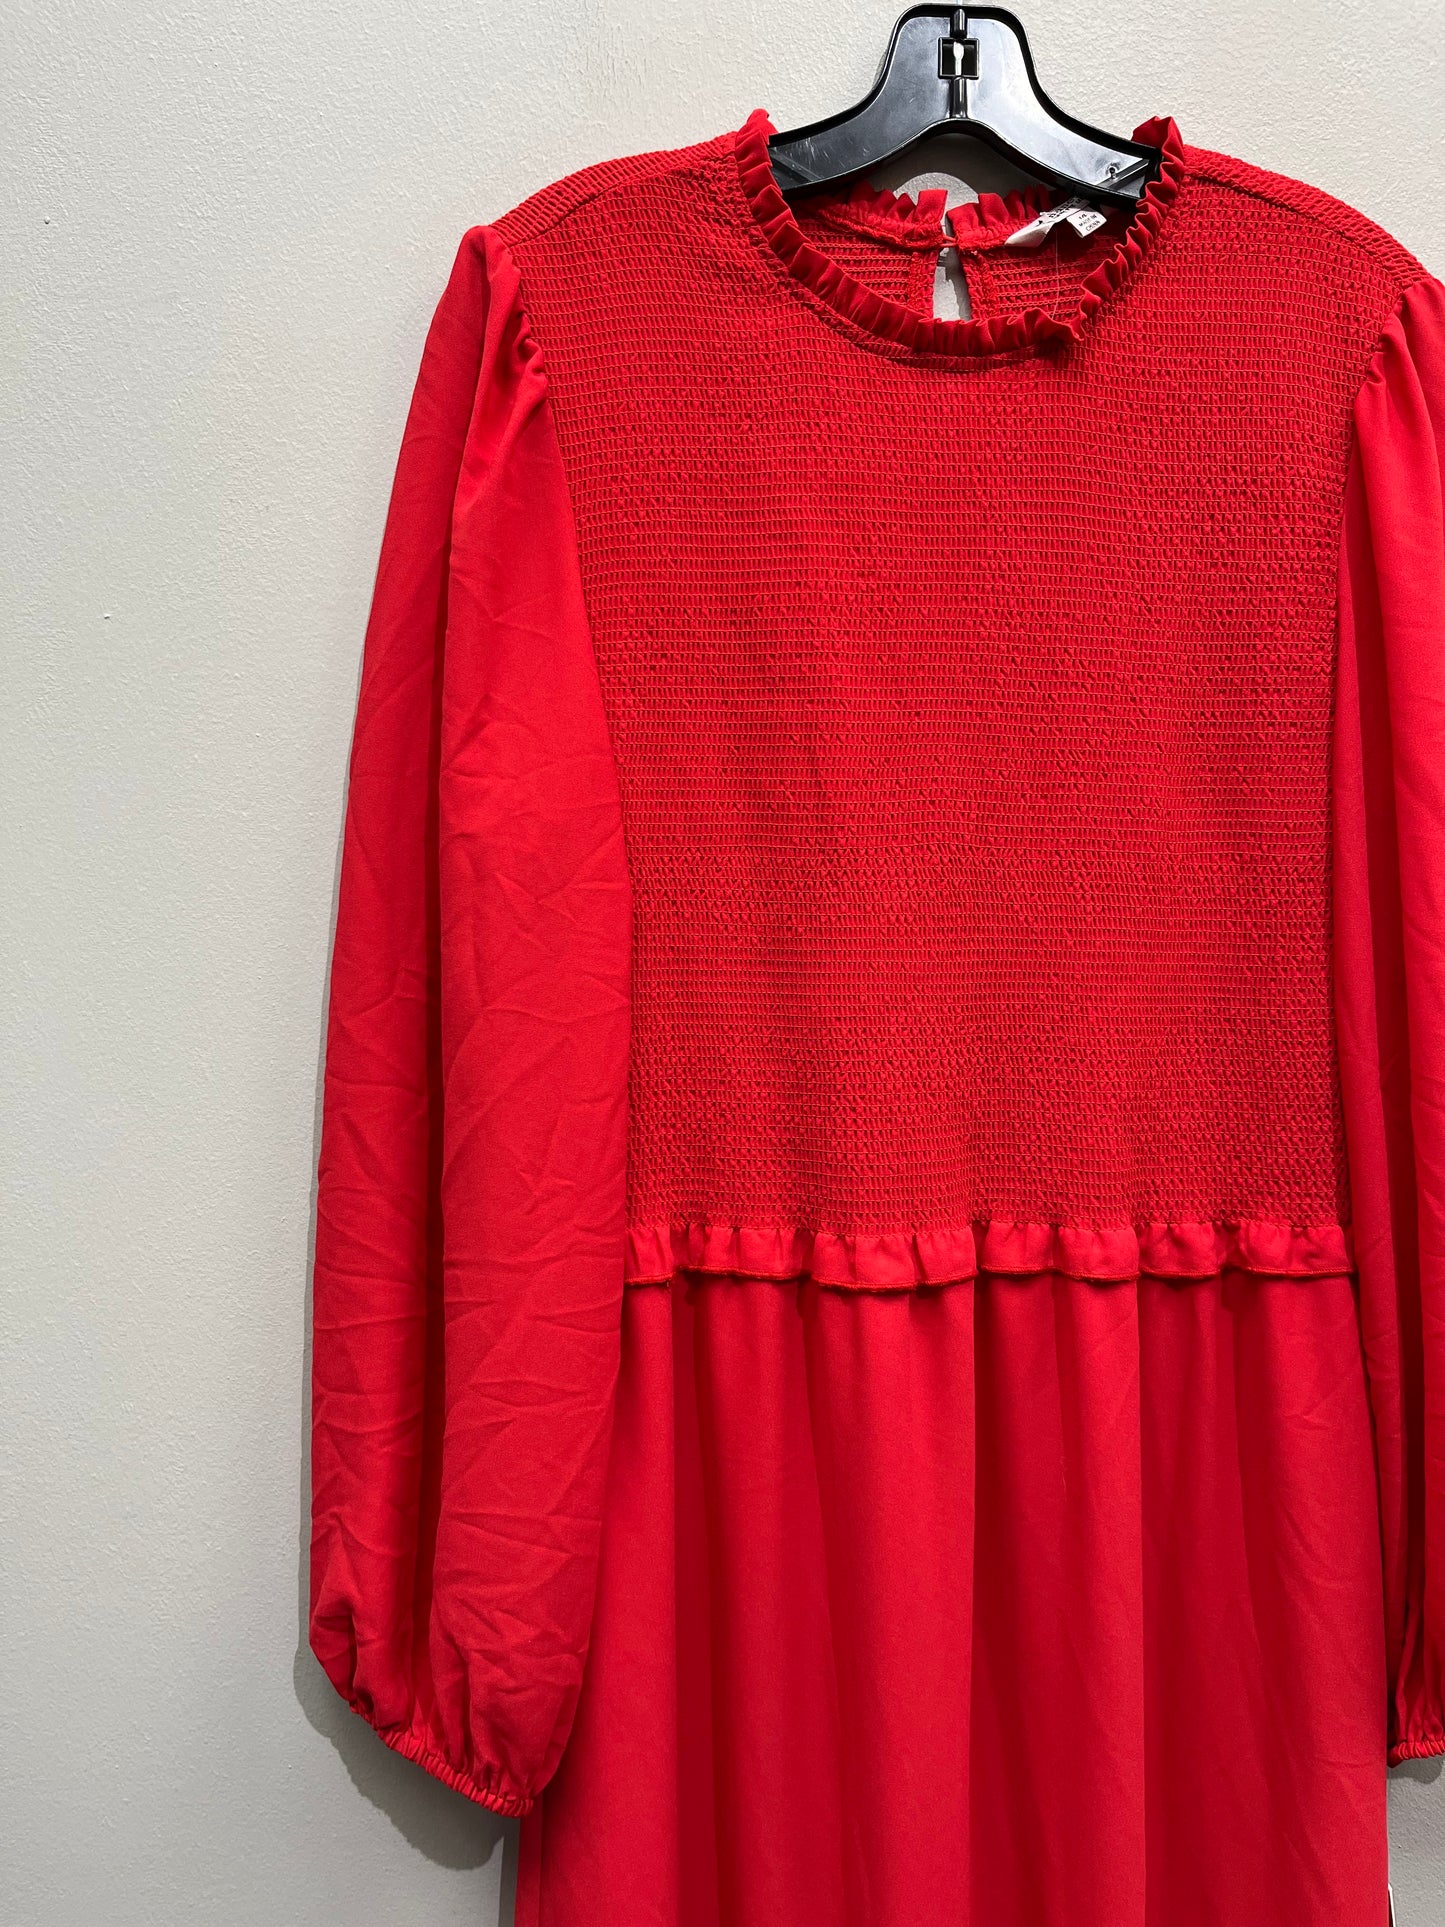 Dress Casual Maxi By Nanette Lepore  Size: Xl